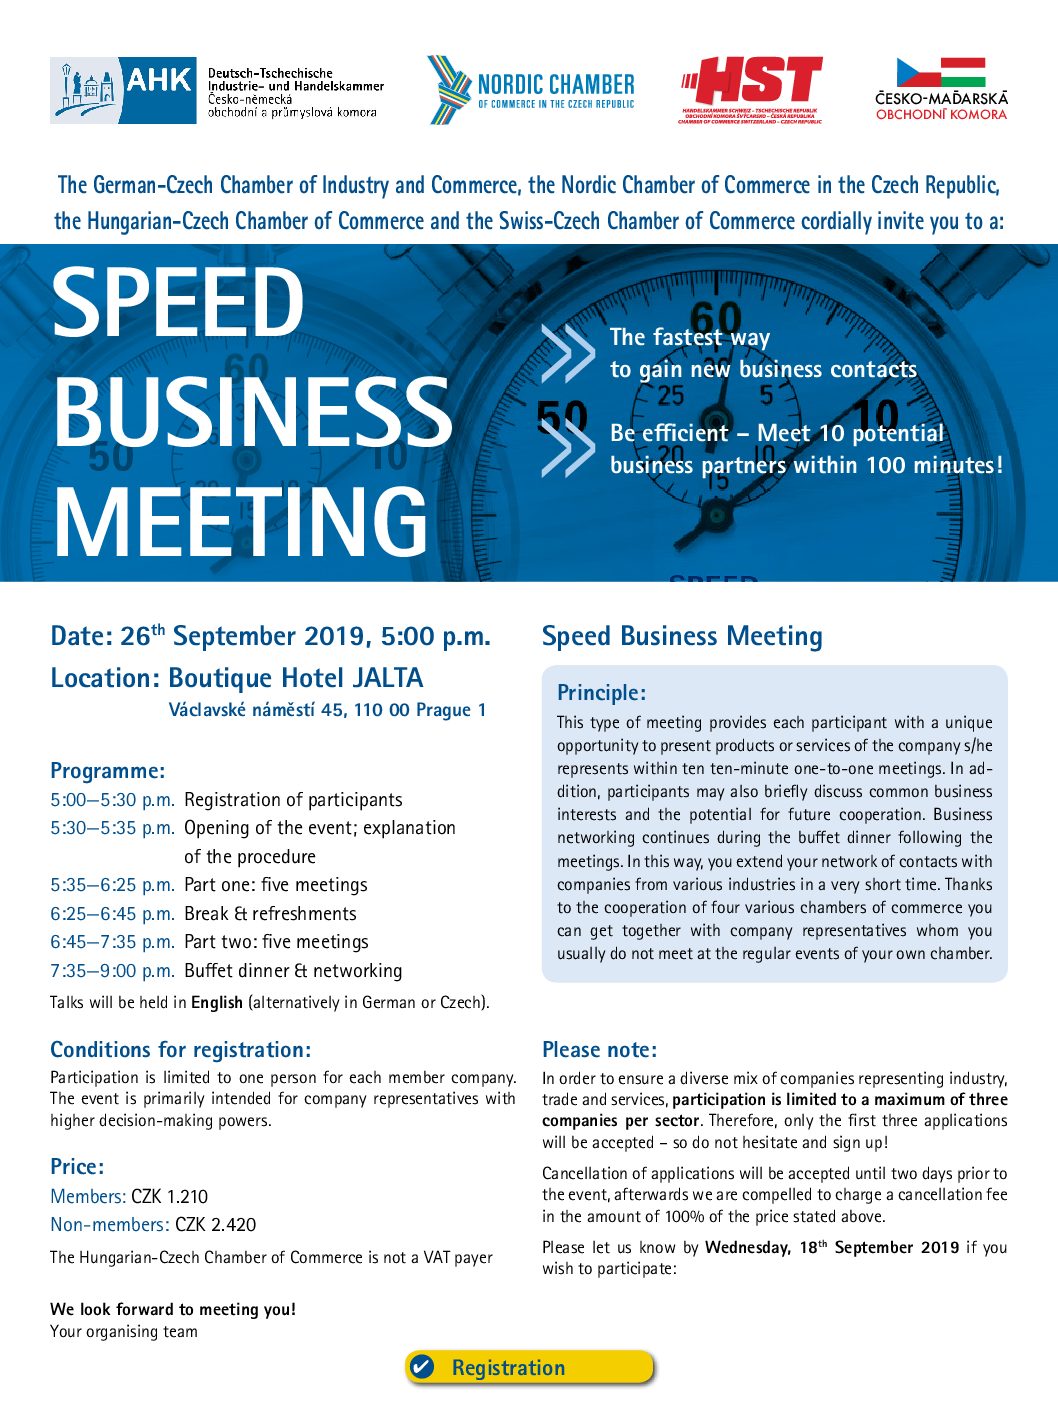 Speed Business Meeting 26. 9. 2019